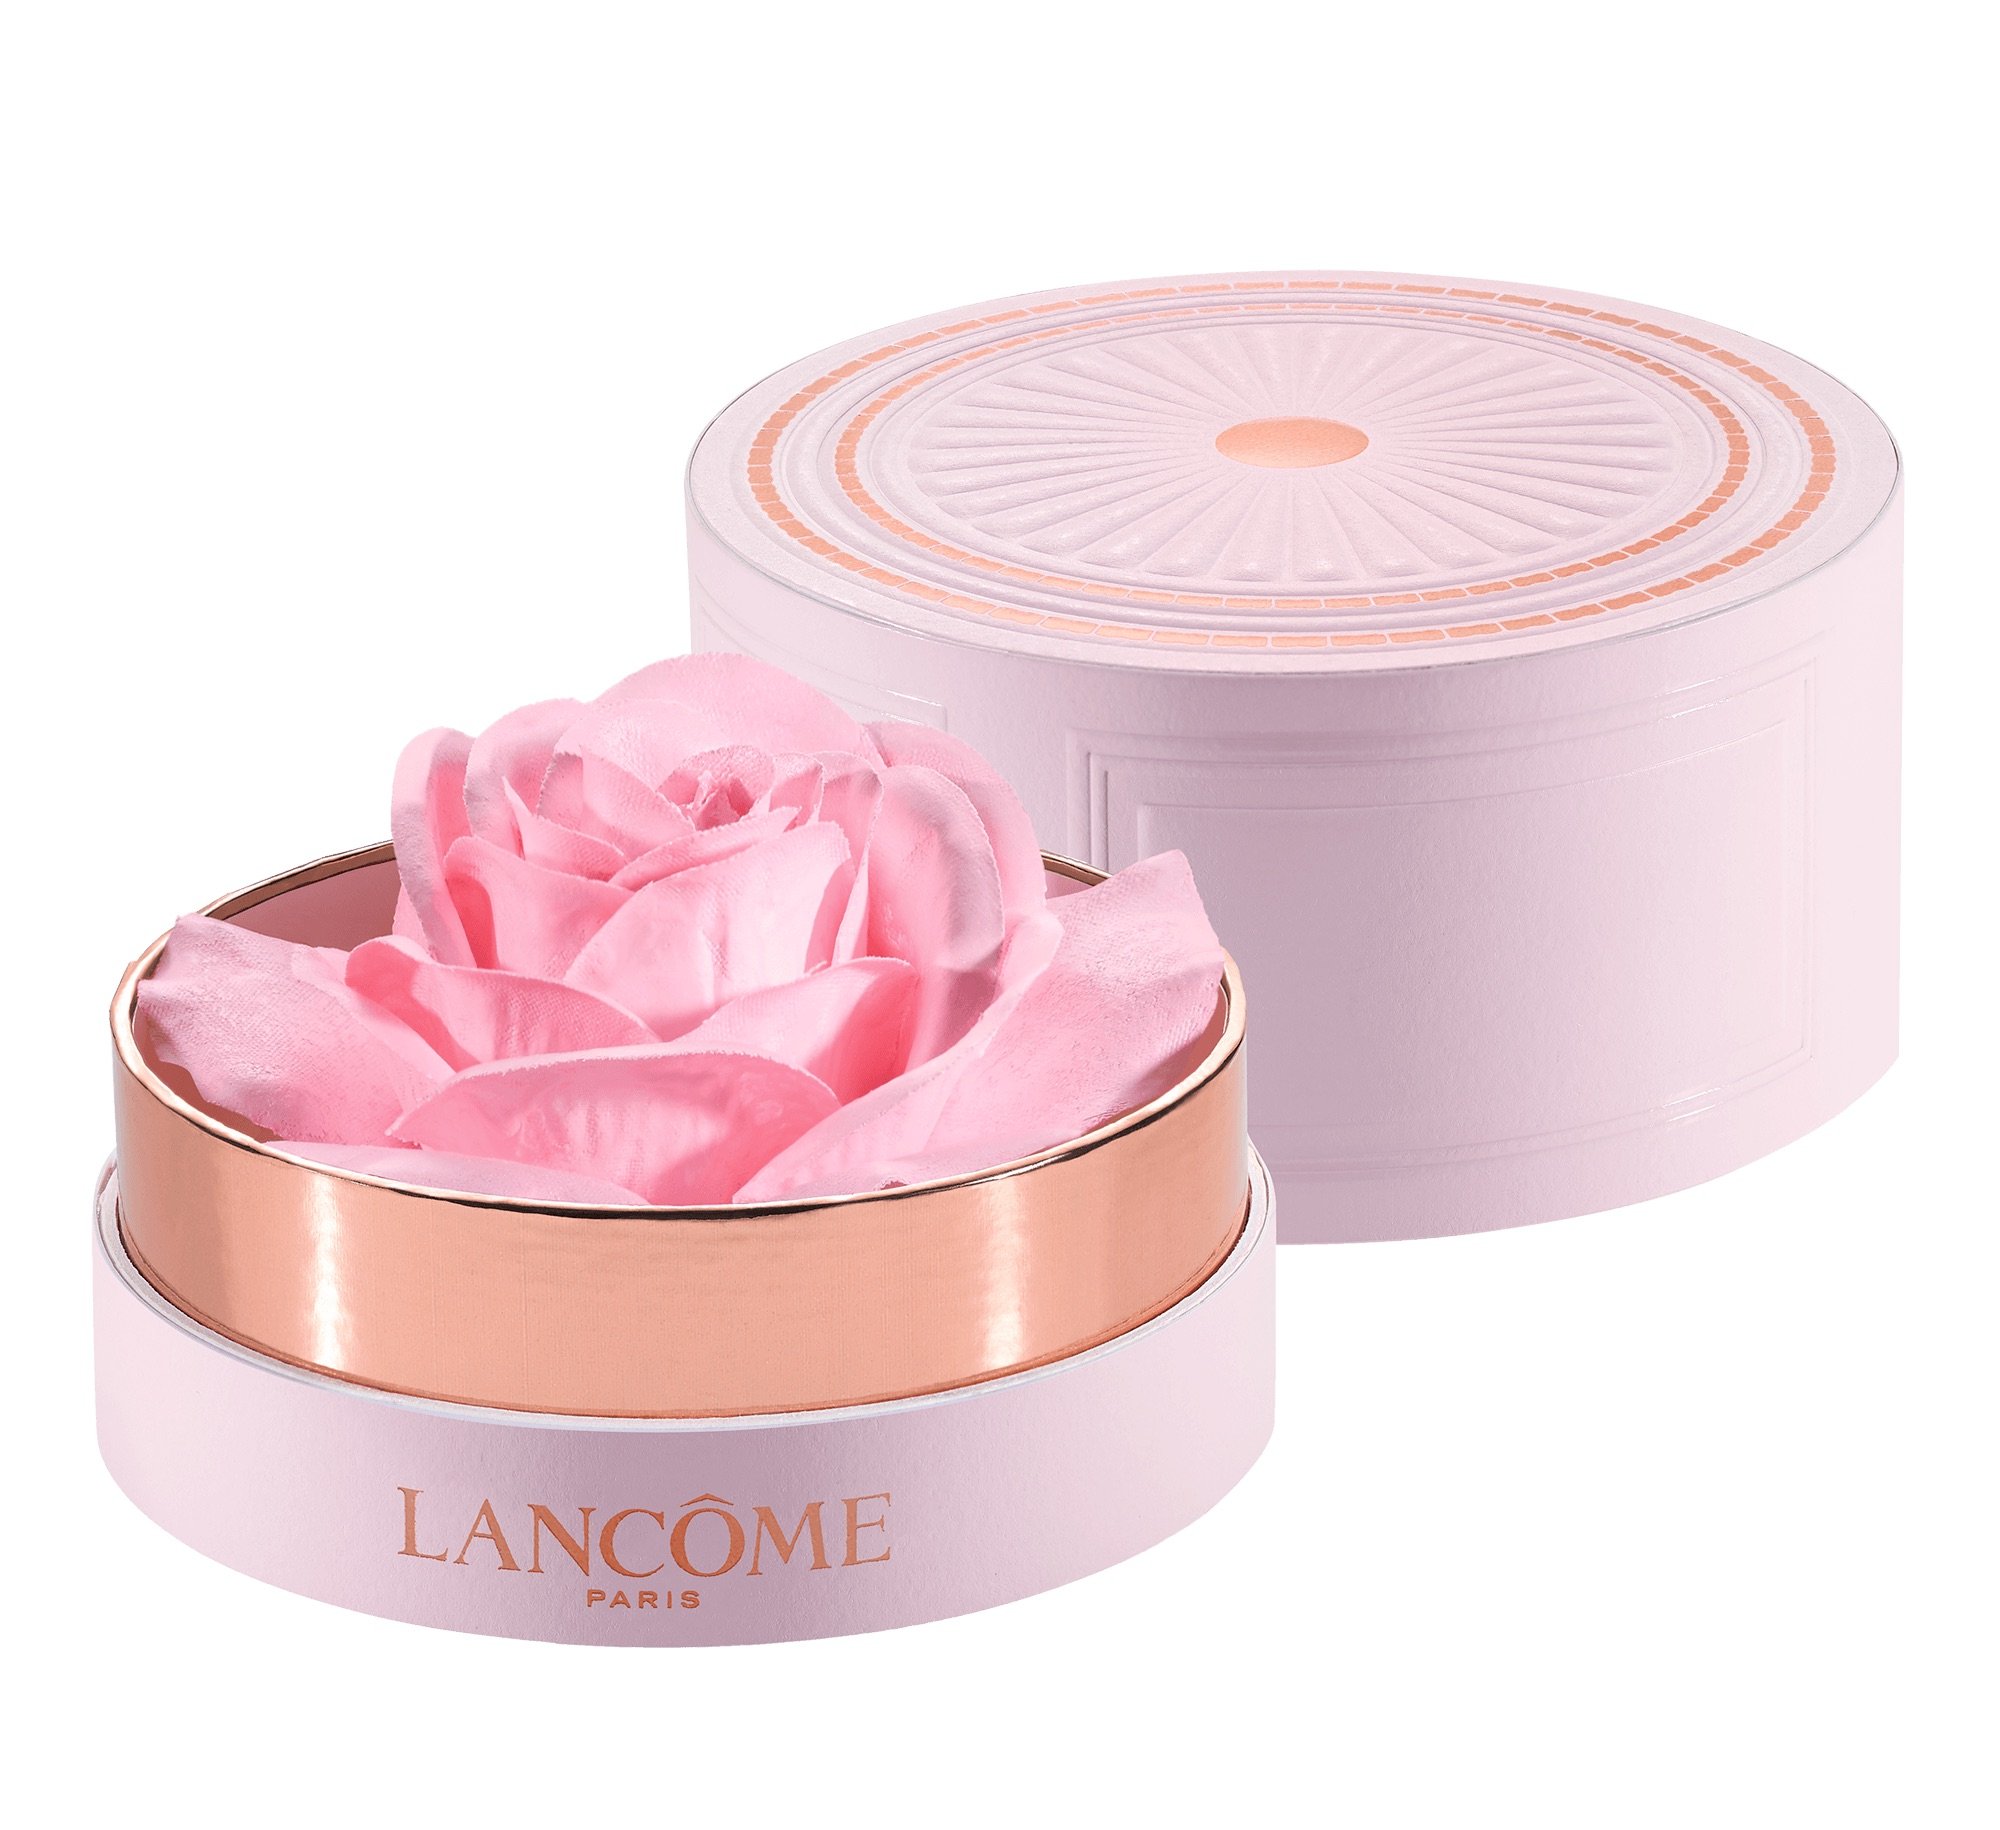 Lancome La Rose a Poudre highlighter